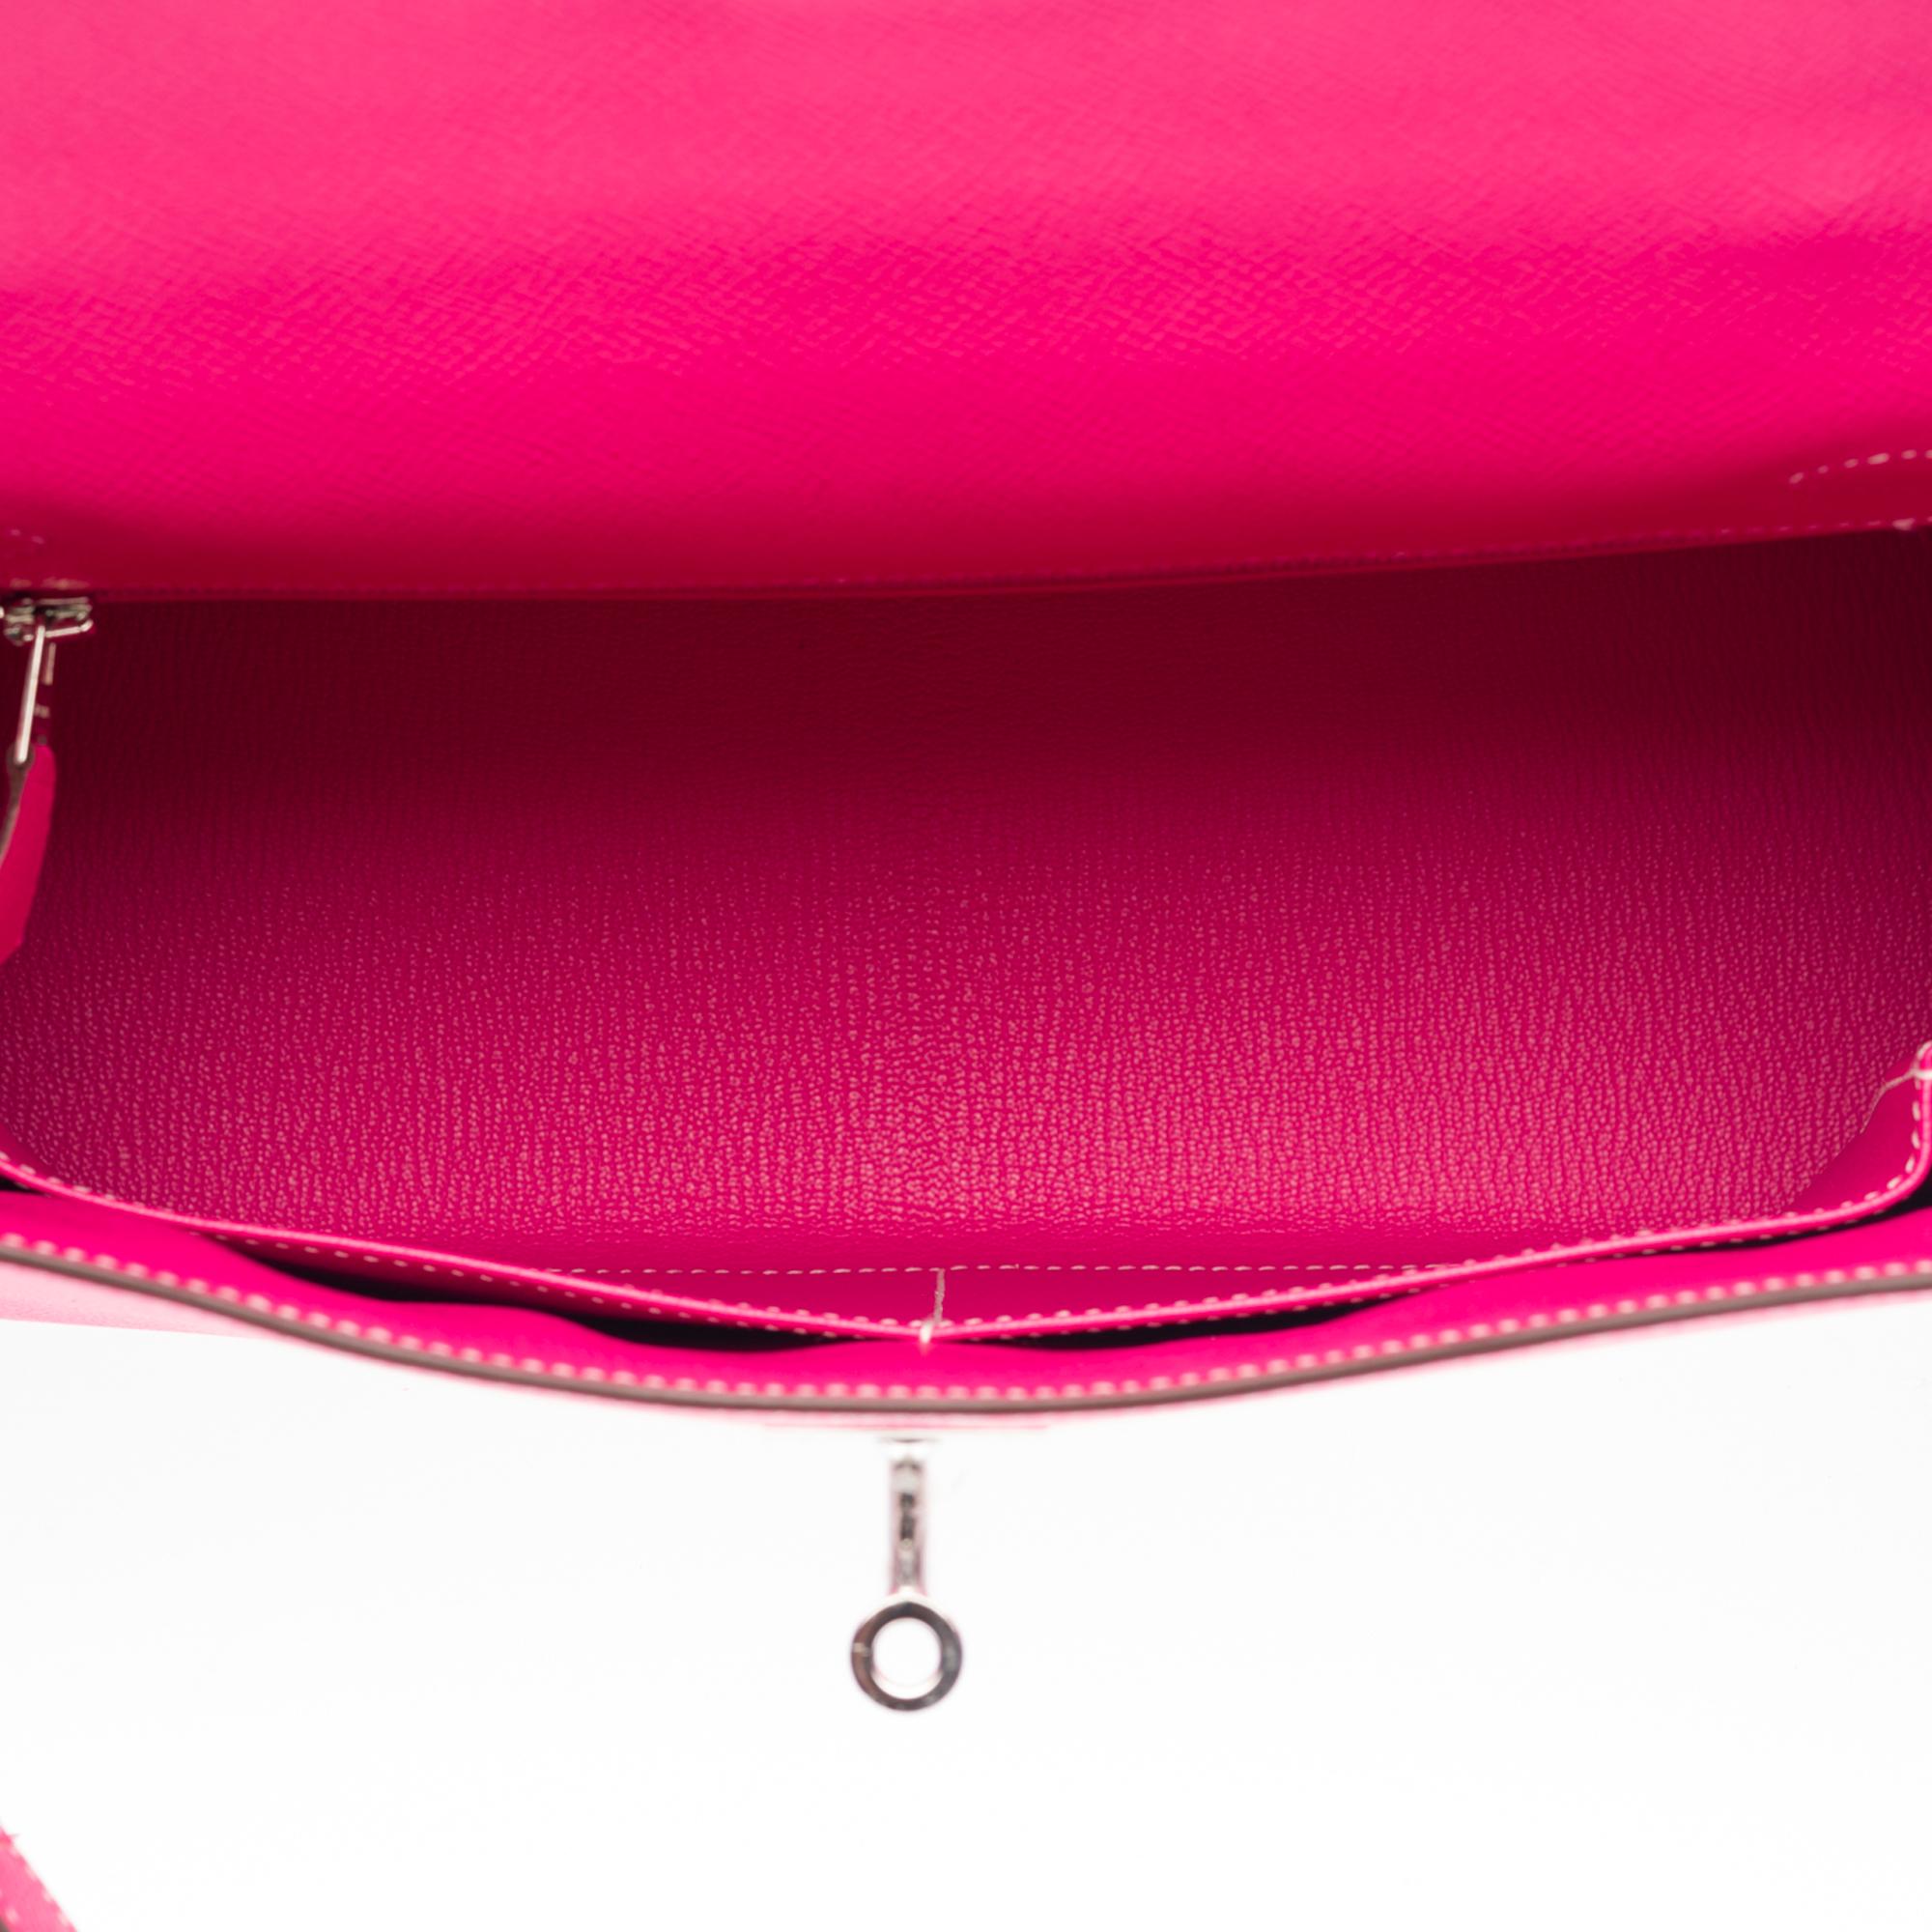 Hermès Kelly 32 sellier handbag strap in Rose lipstick epsom leather, SHW 3